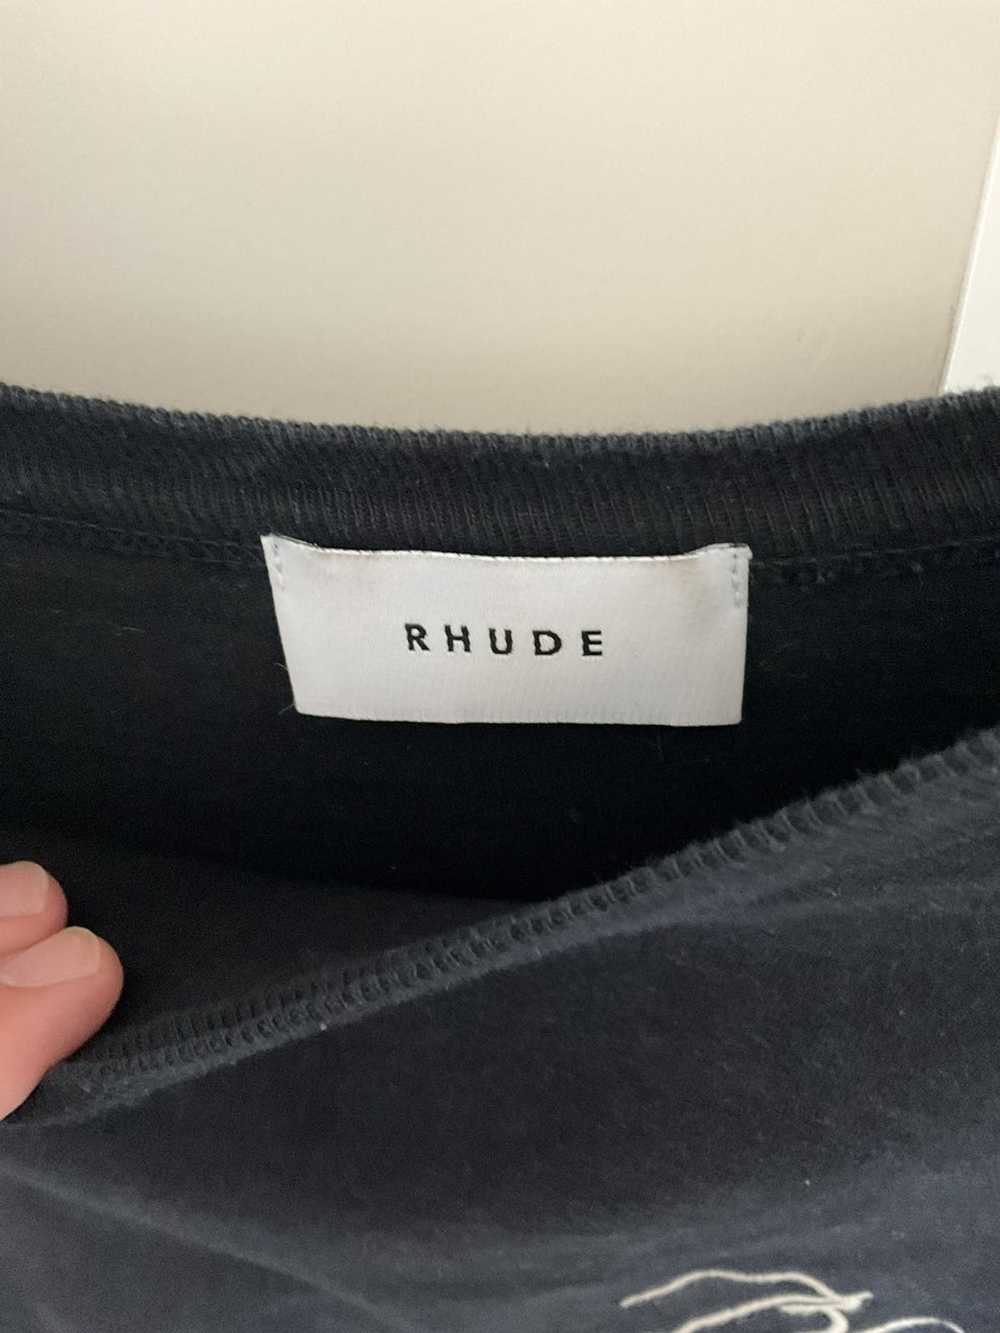 Rhude RHUDE - image 4